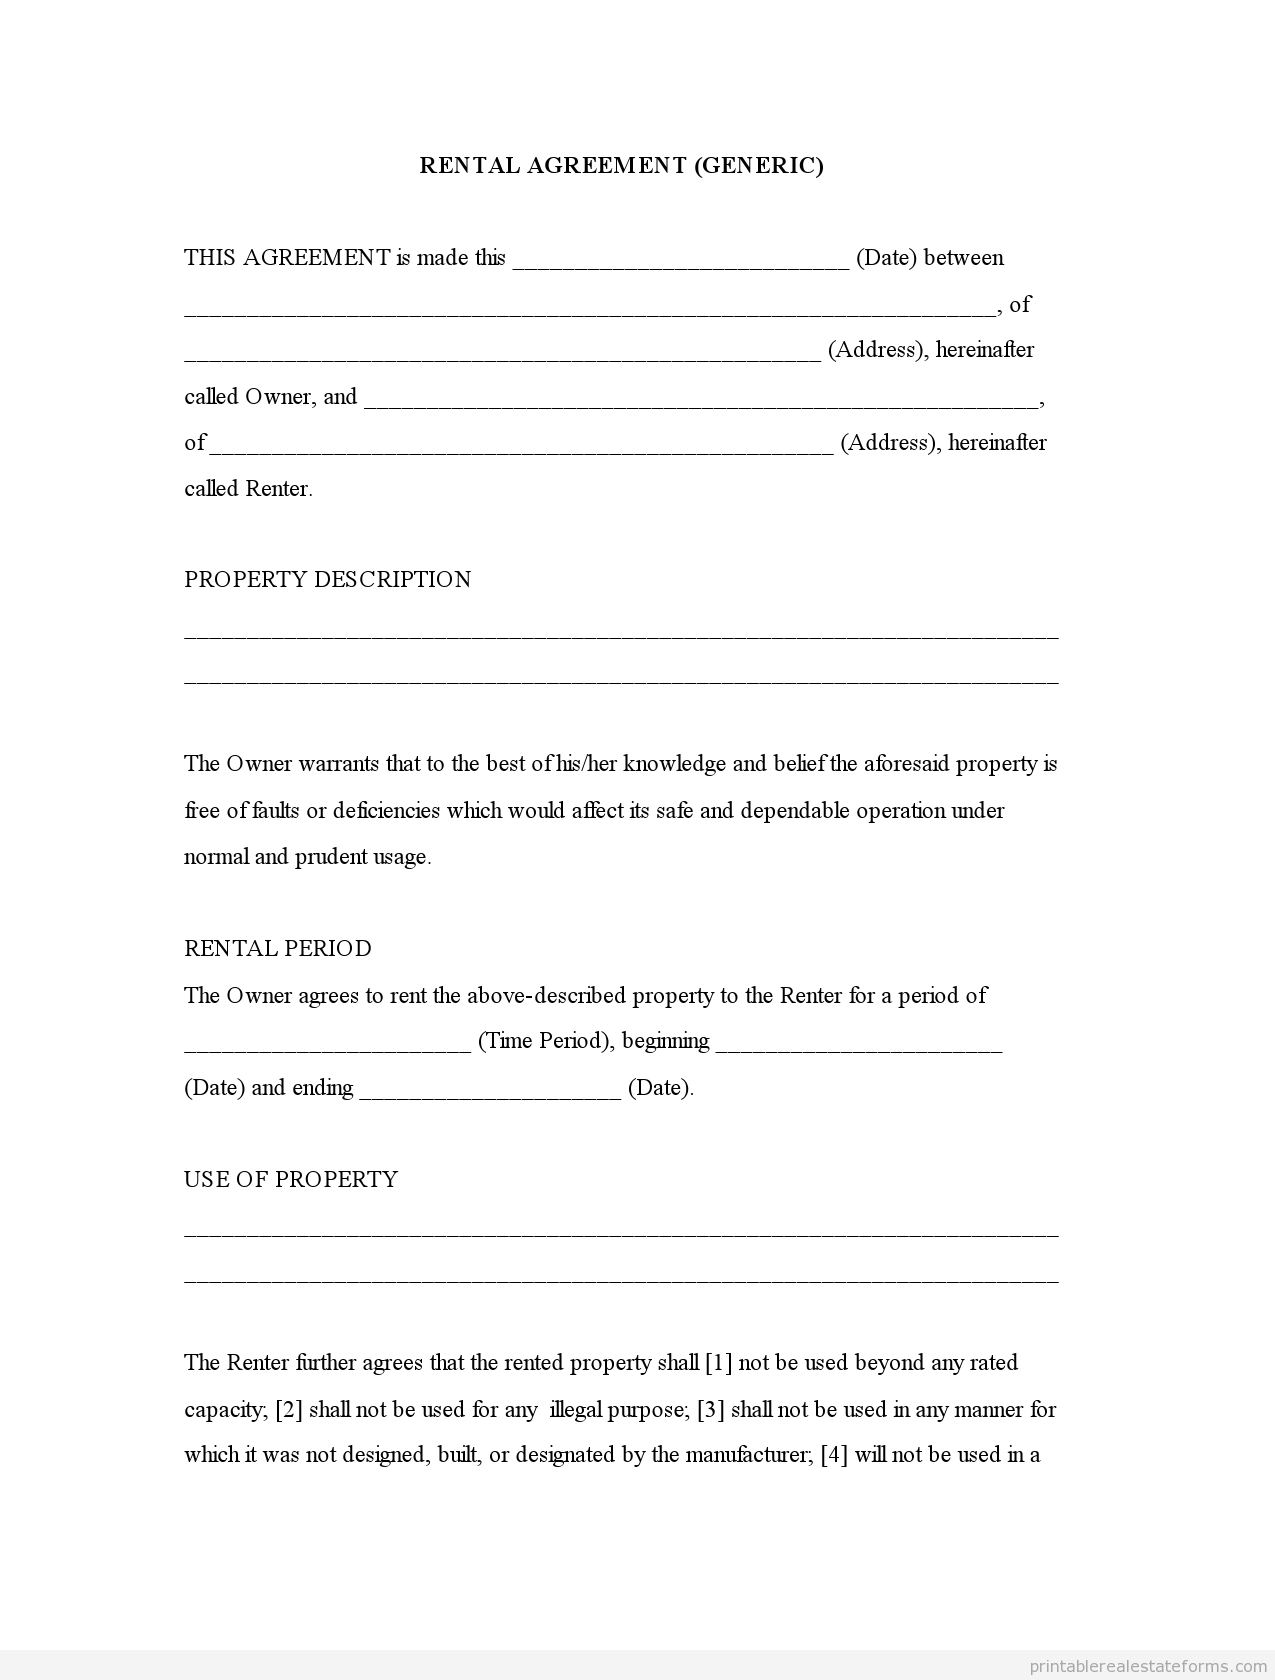 Free Printable Rental Agreement | Rental Agreement (Generic)0001 - Rental Agreement Forms Free Printable